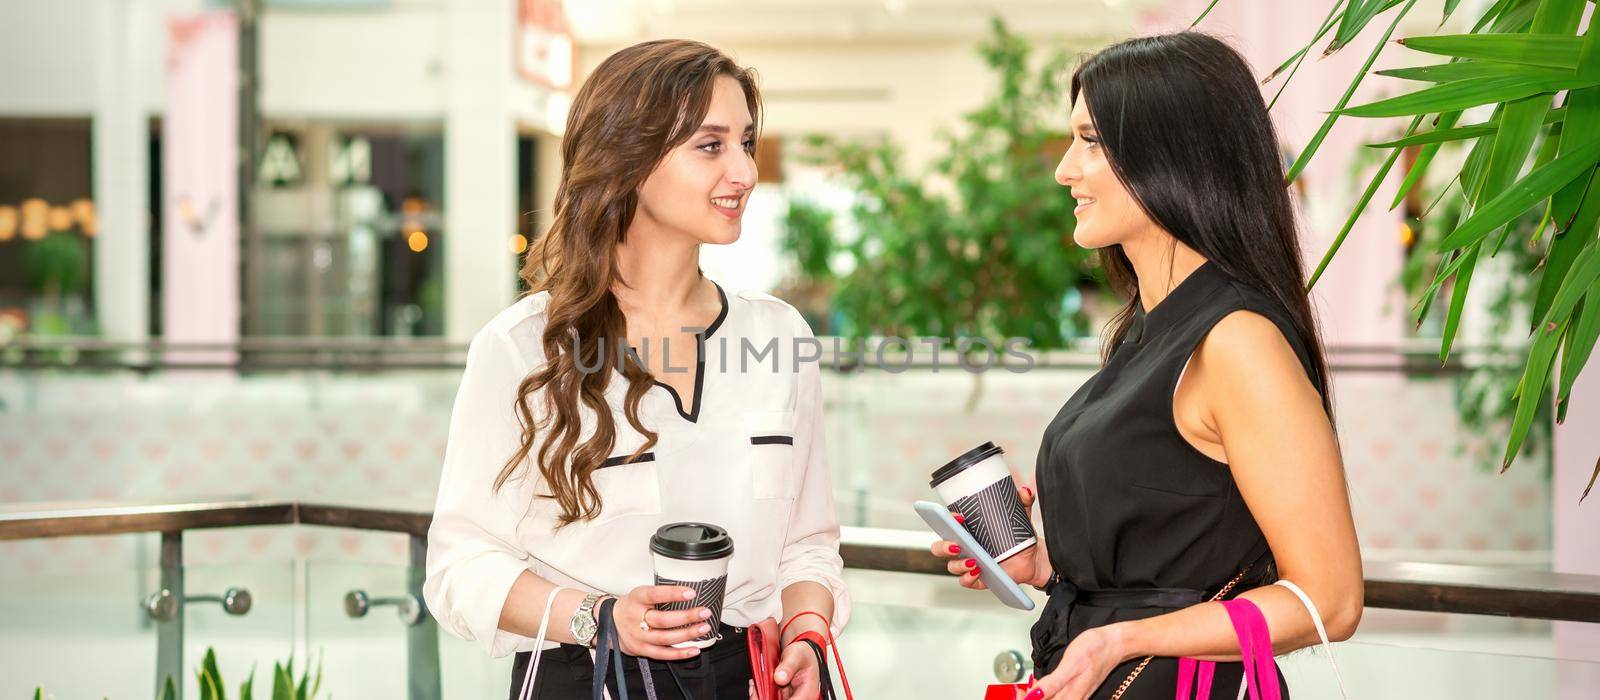 Two young women at shopping mall by okskukuruza